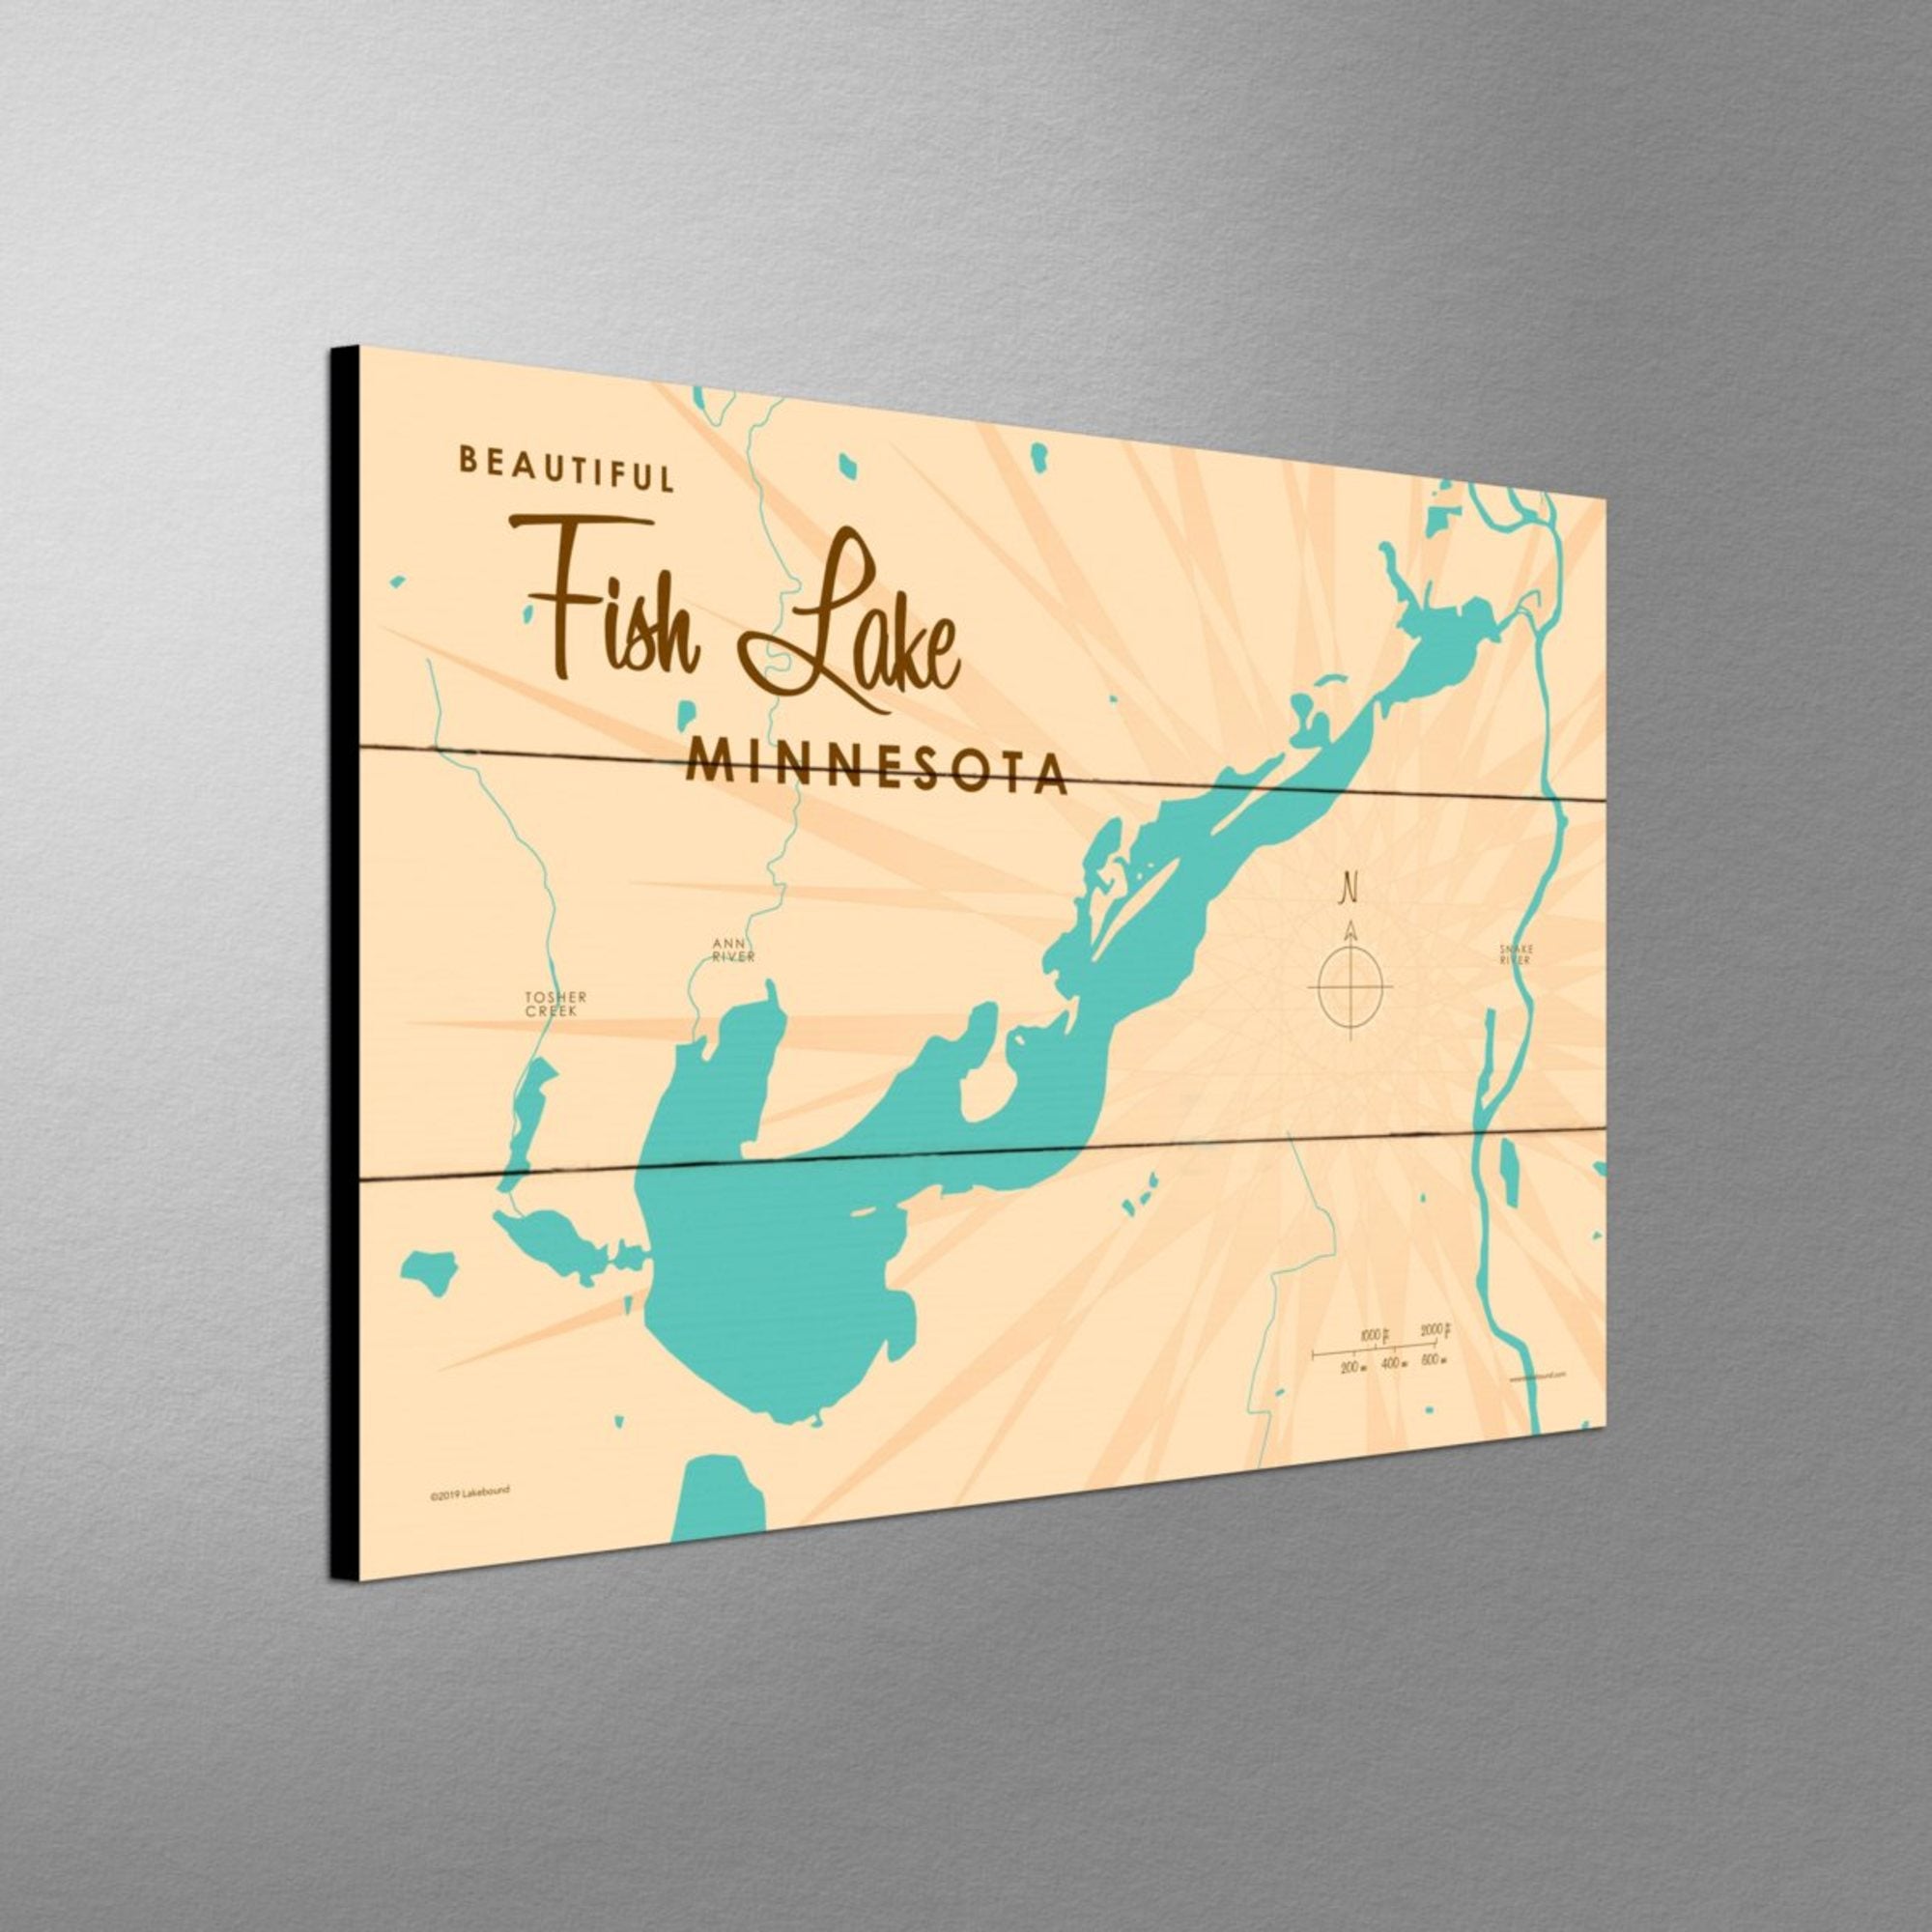 Fish Lake Minnesota, Wood Sign Map Art